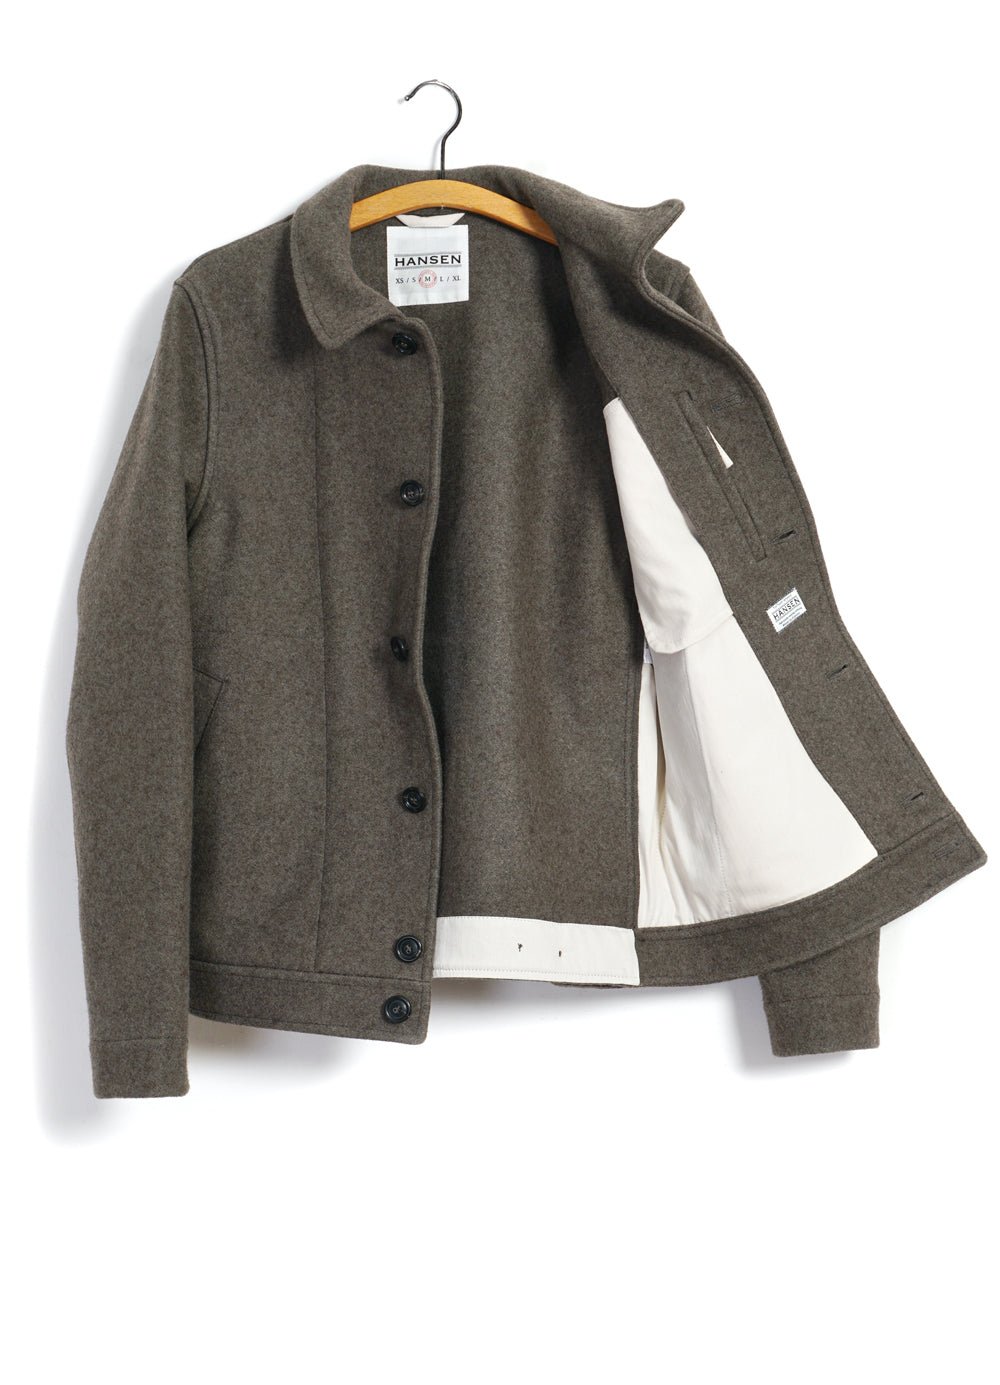 HANSEN GARMENTS - ATLAS | Short Wool Felt Jacket | Grey Brown - HANSEN Garments